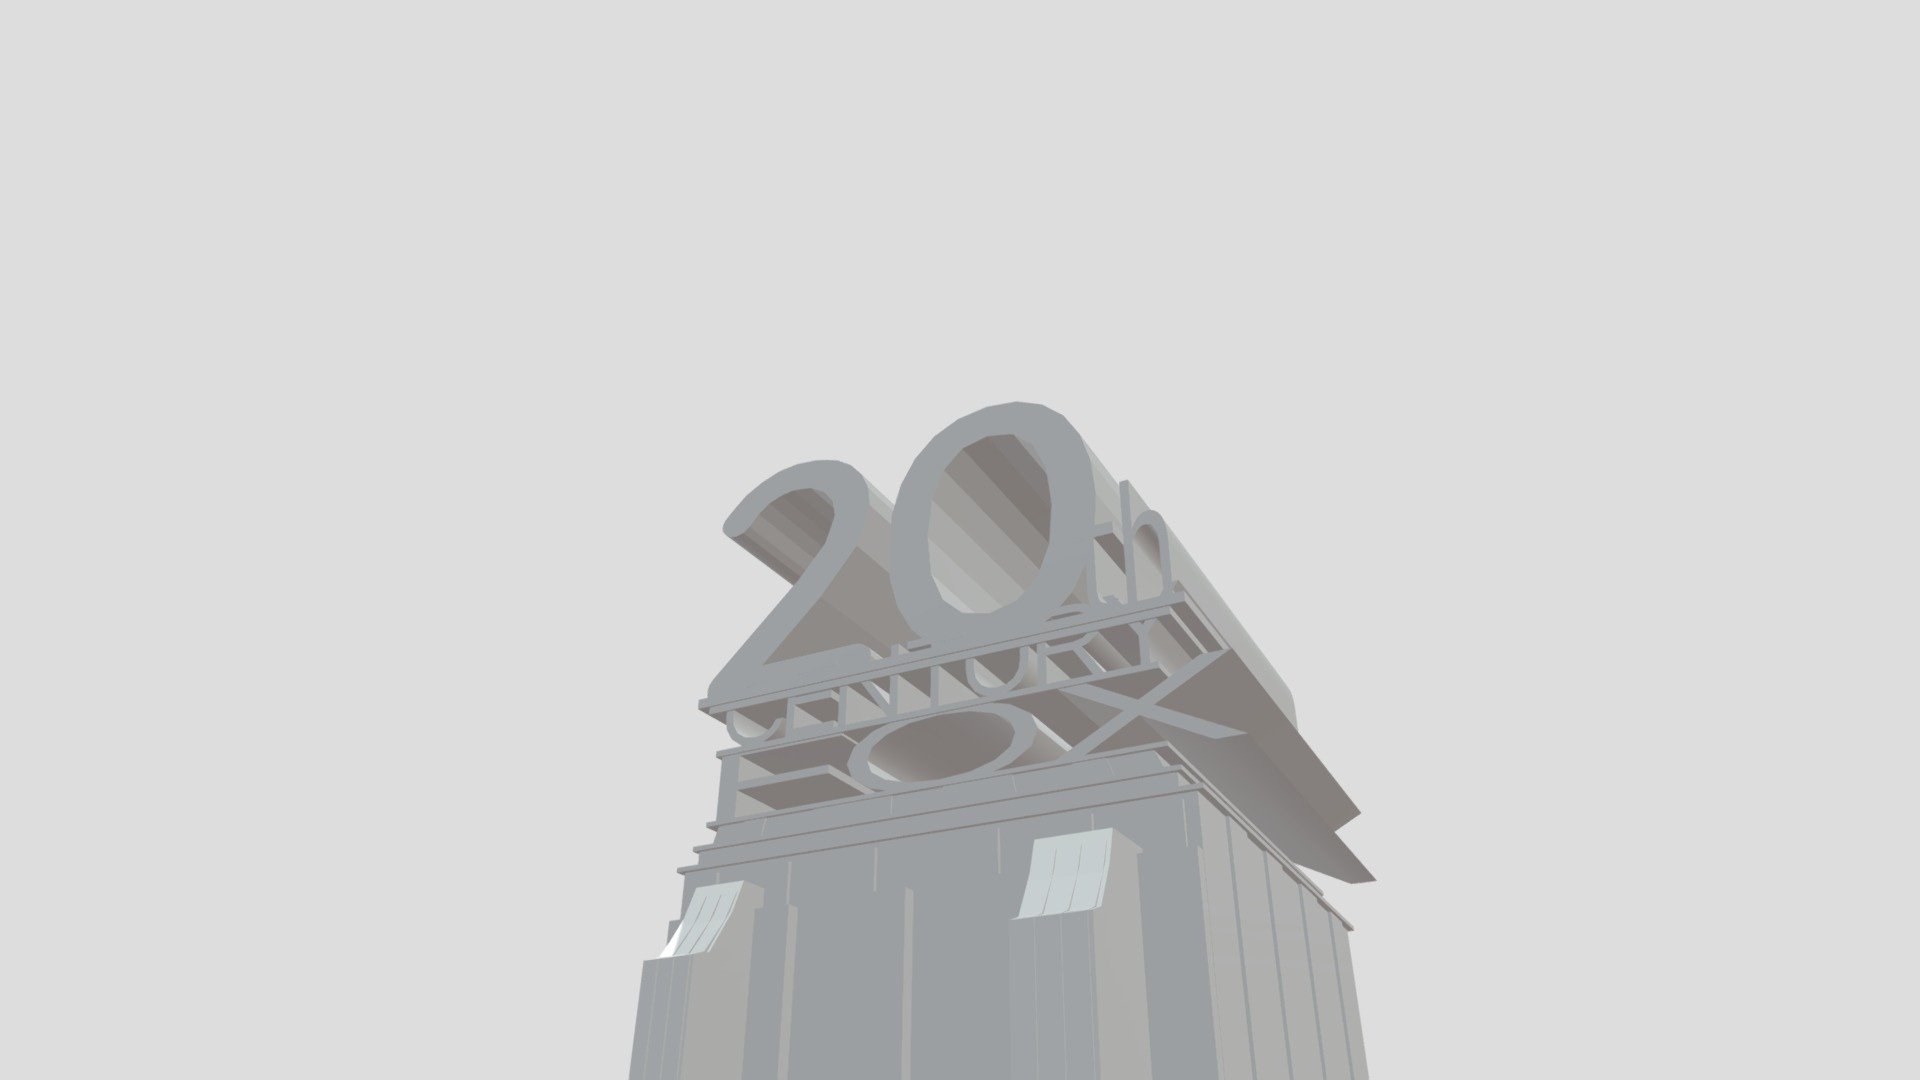 20th Century Fox Logo 2009 V3 - Download Free 3D model by tomas2013  [4aa5ecc] - Sketchfab